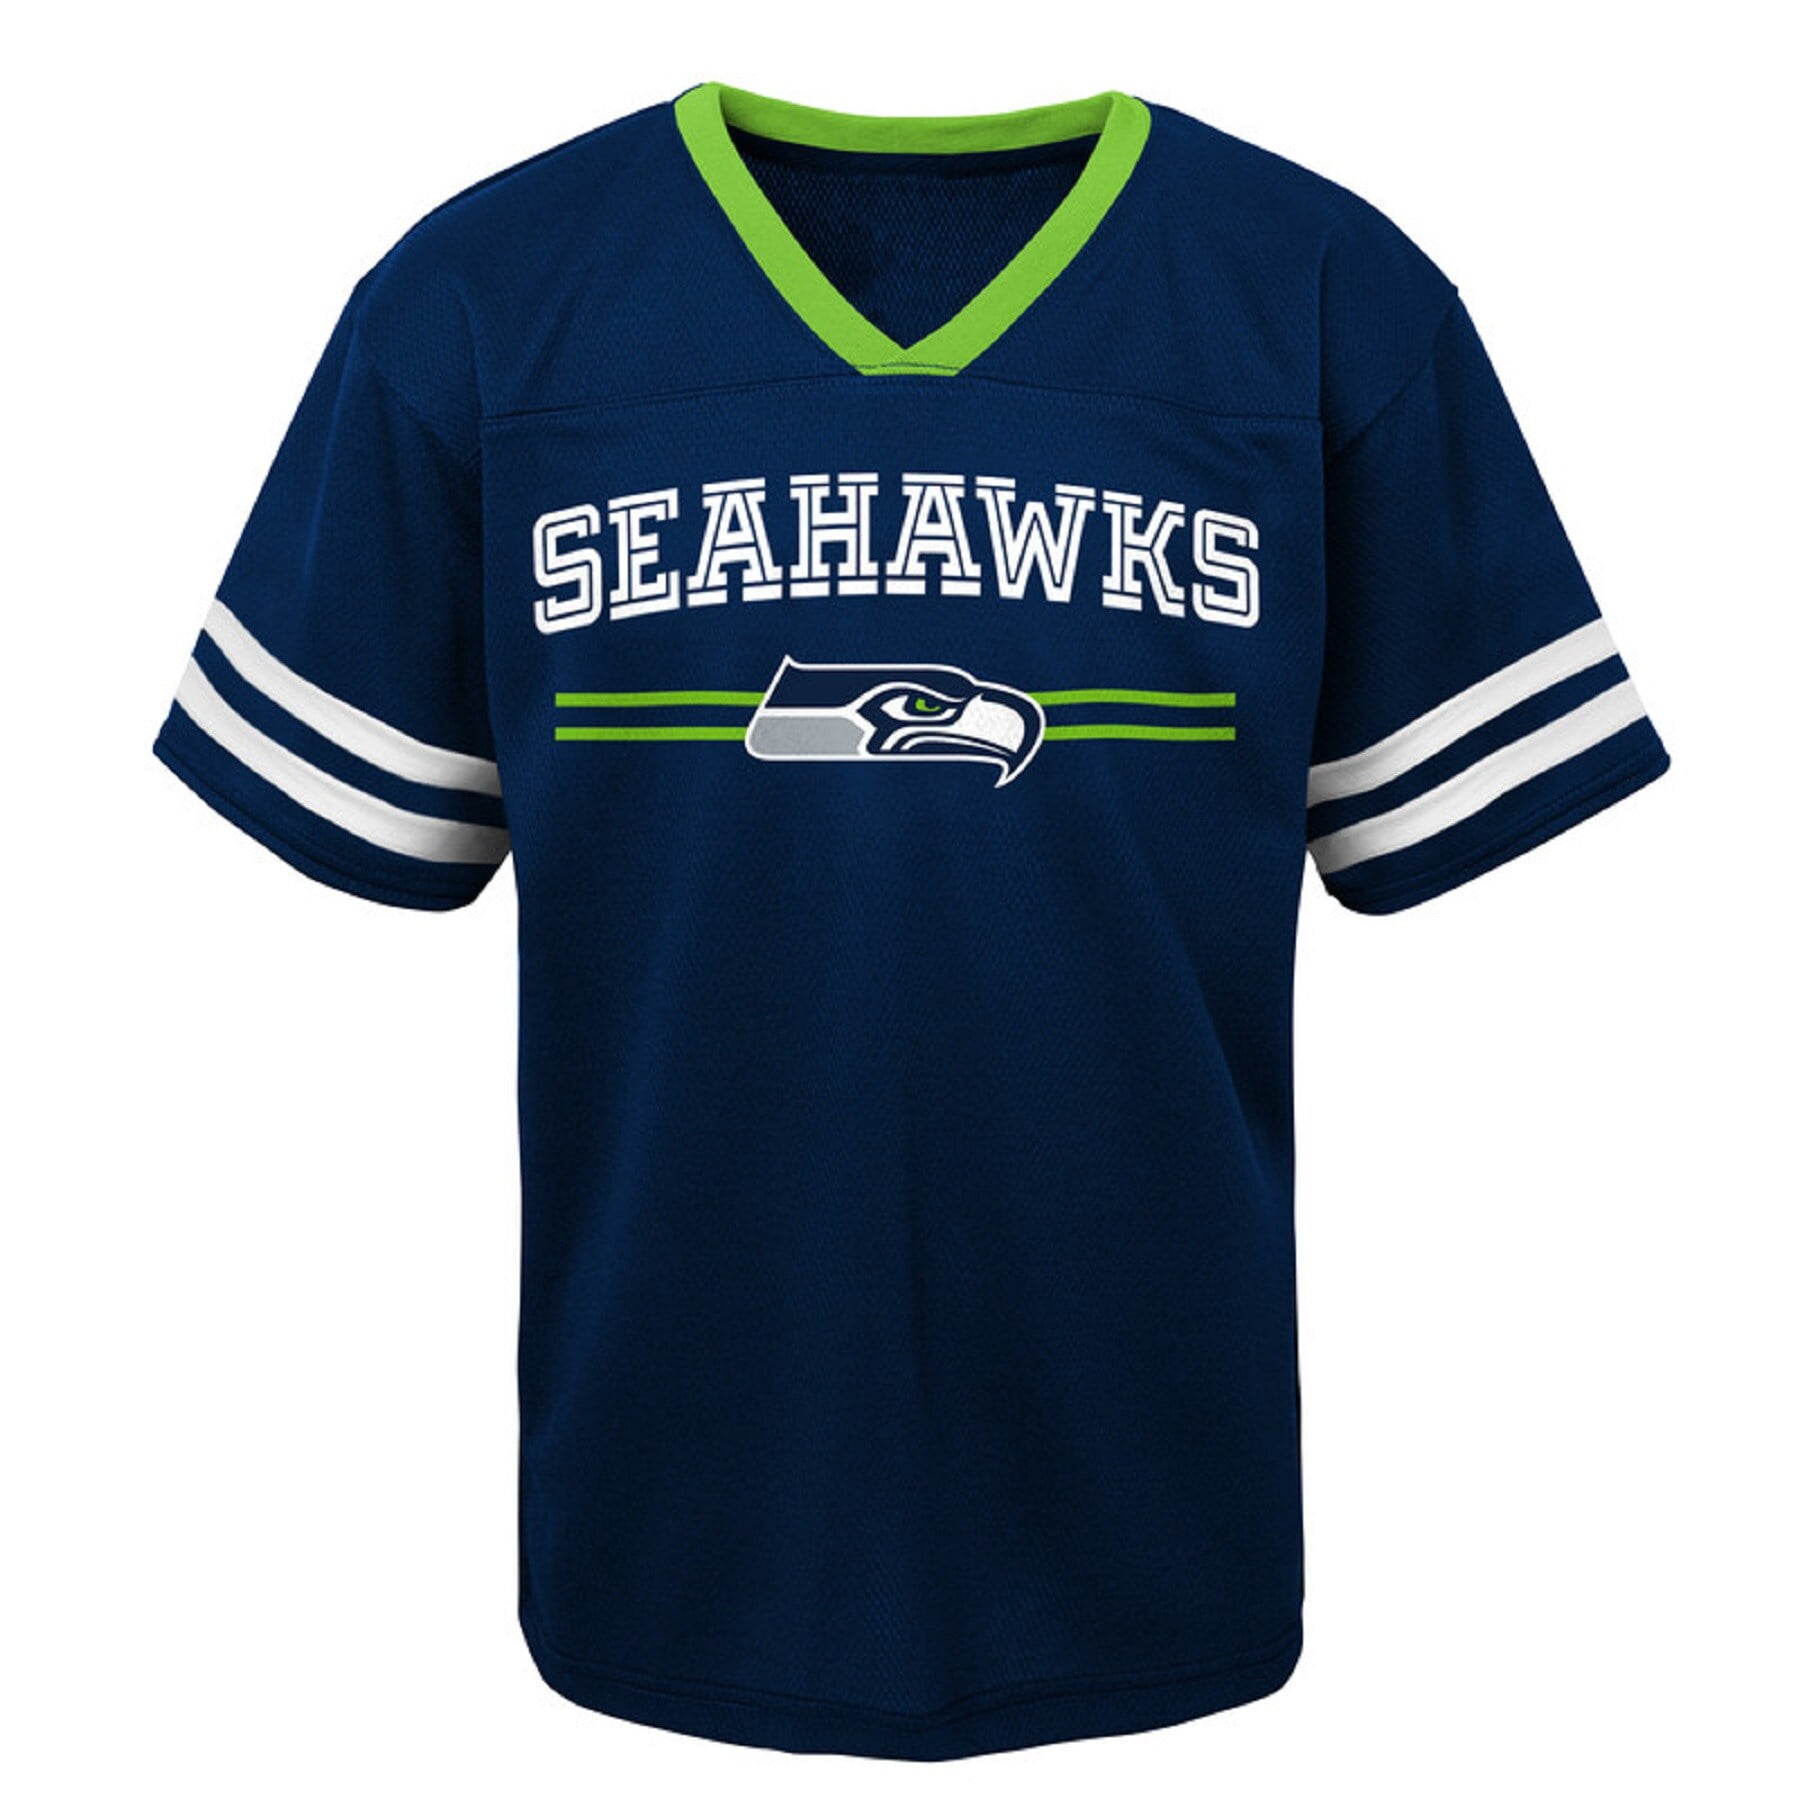 seahawks youth shirt